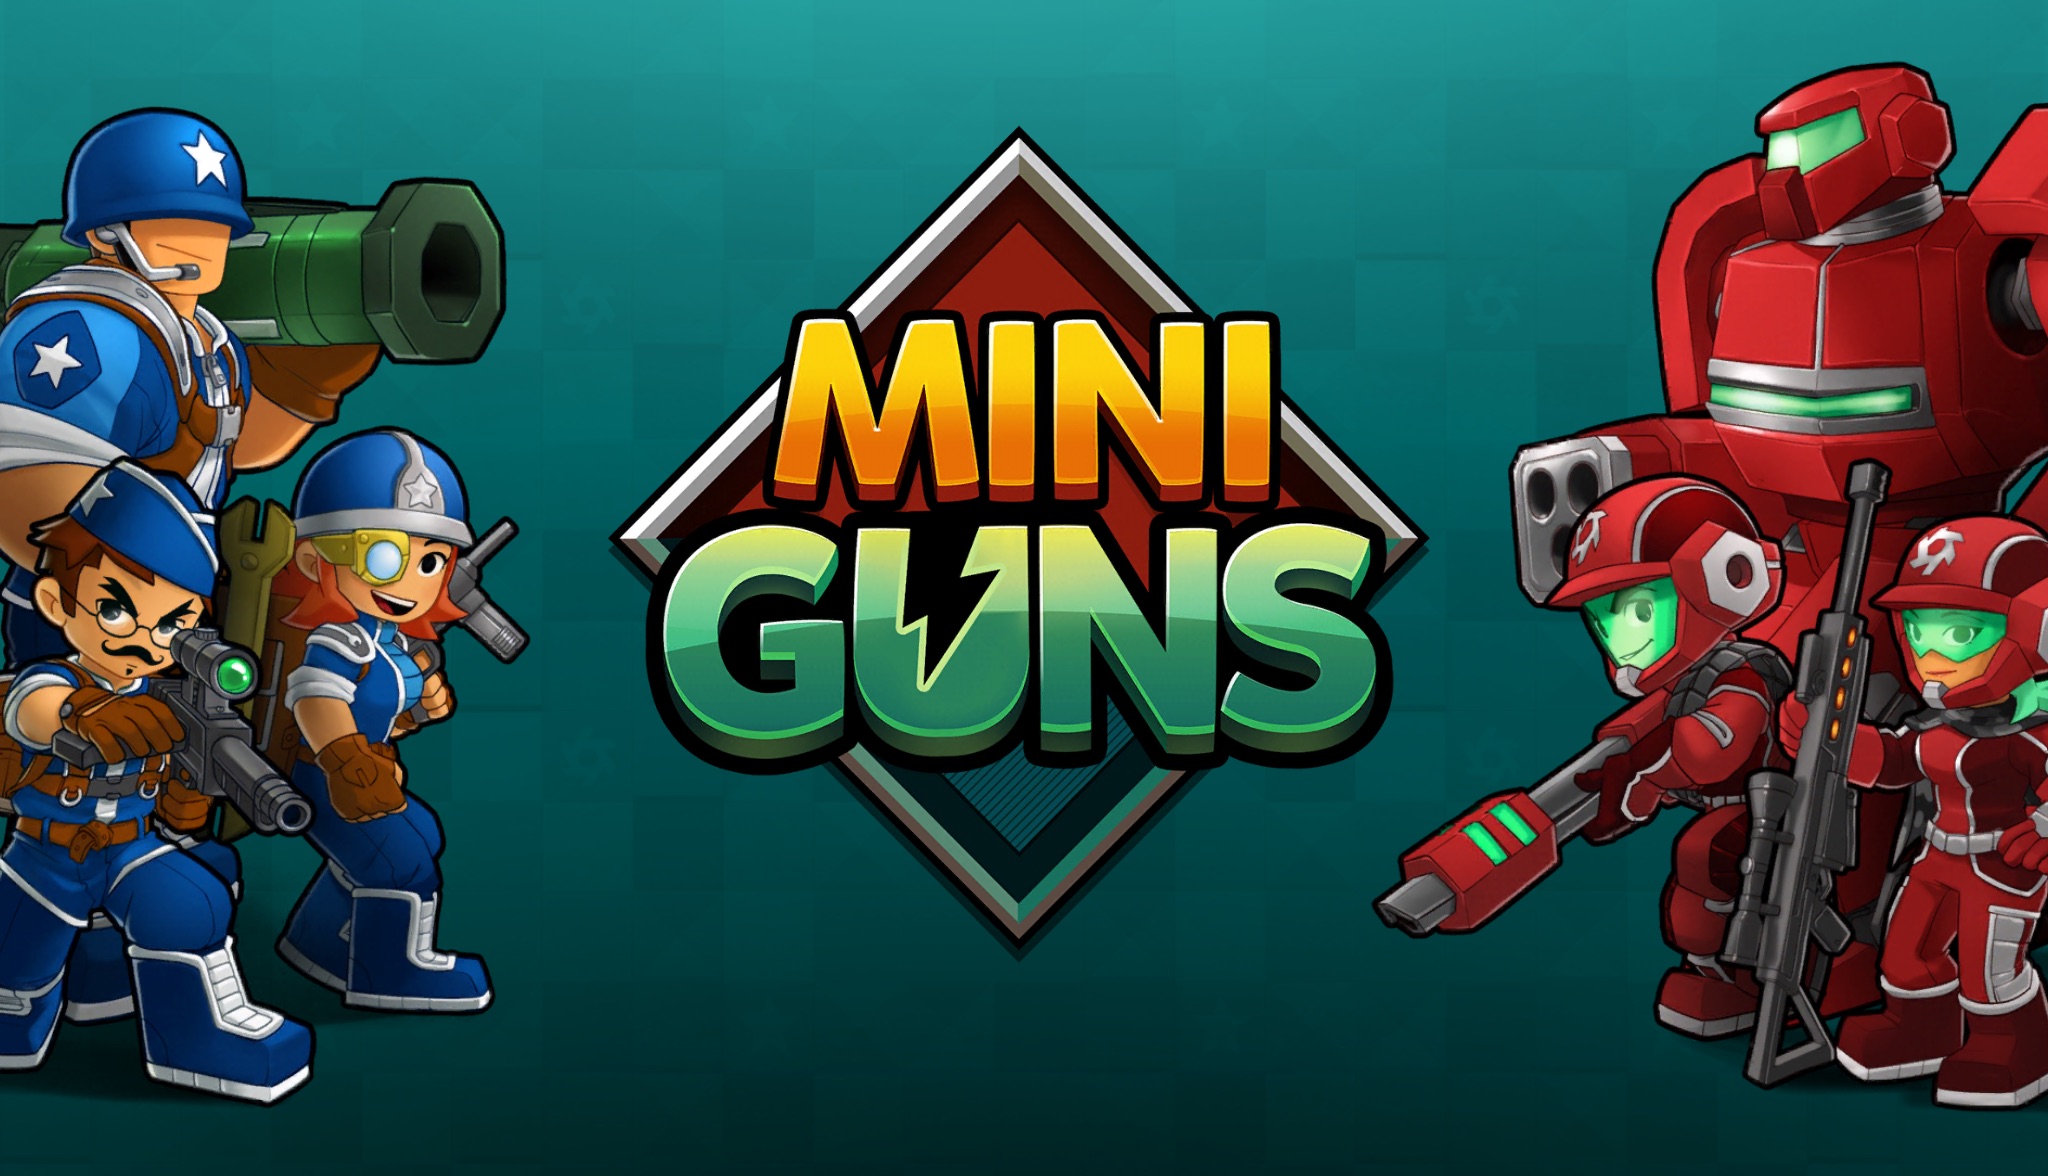 Mini Guns Feature